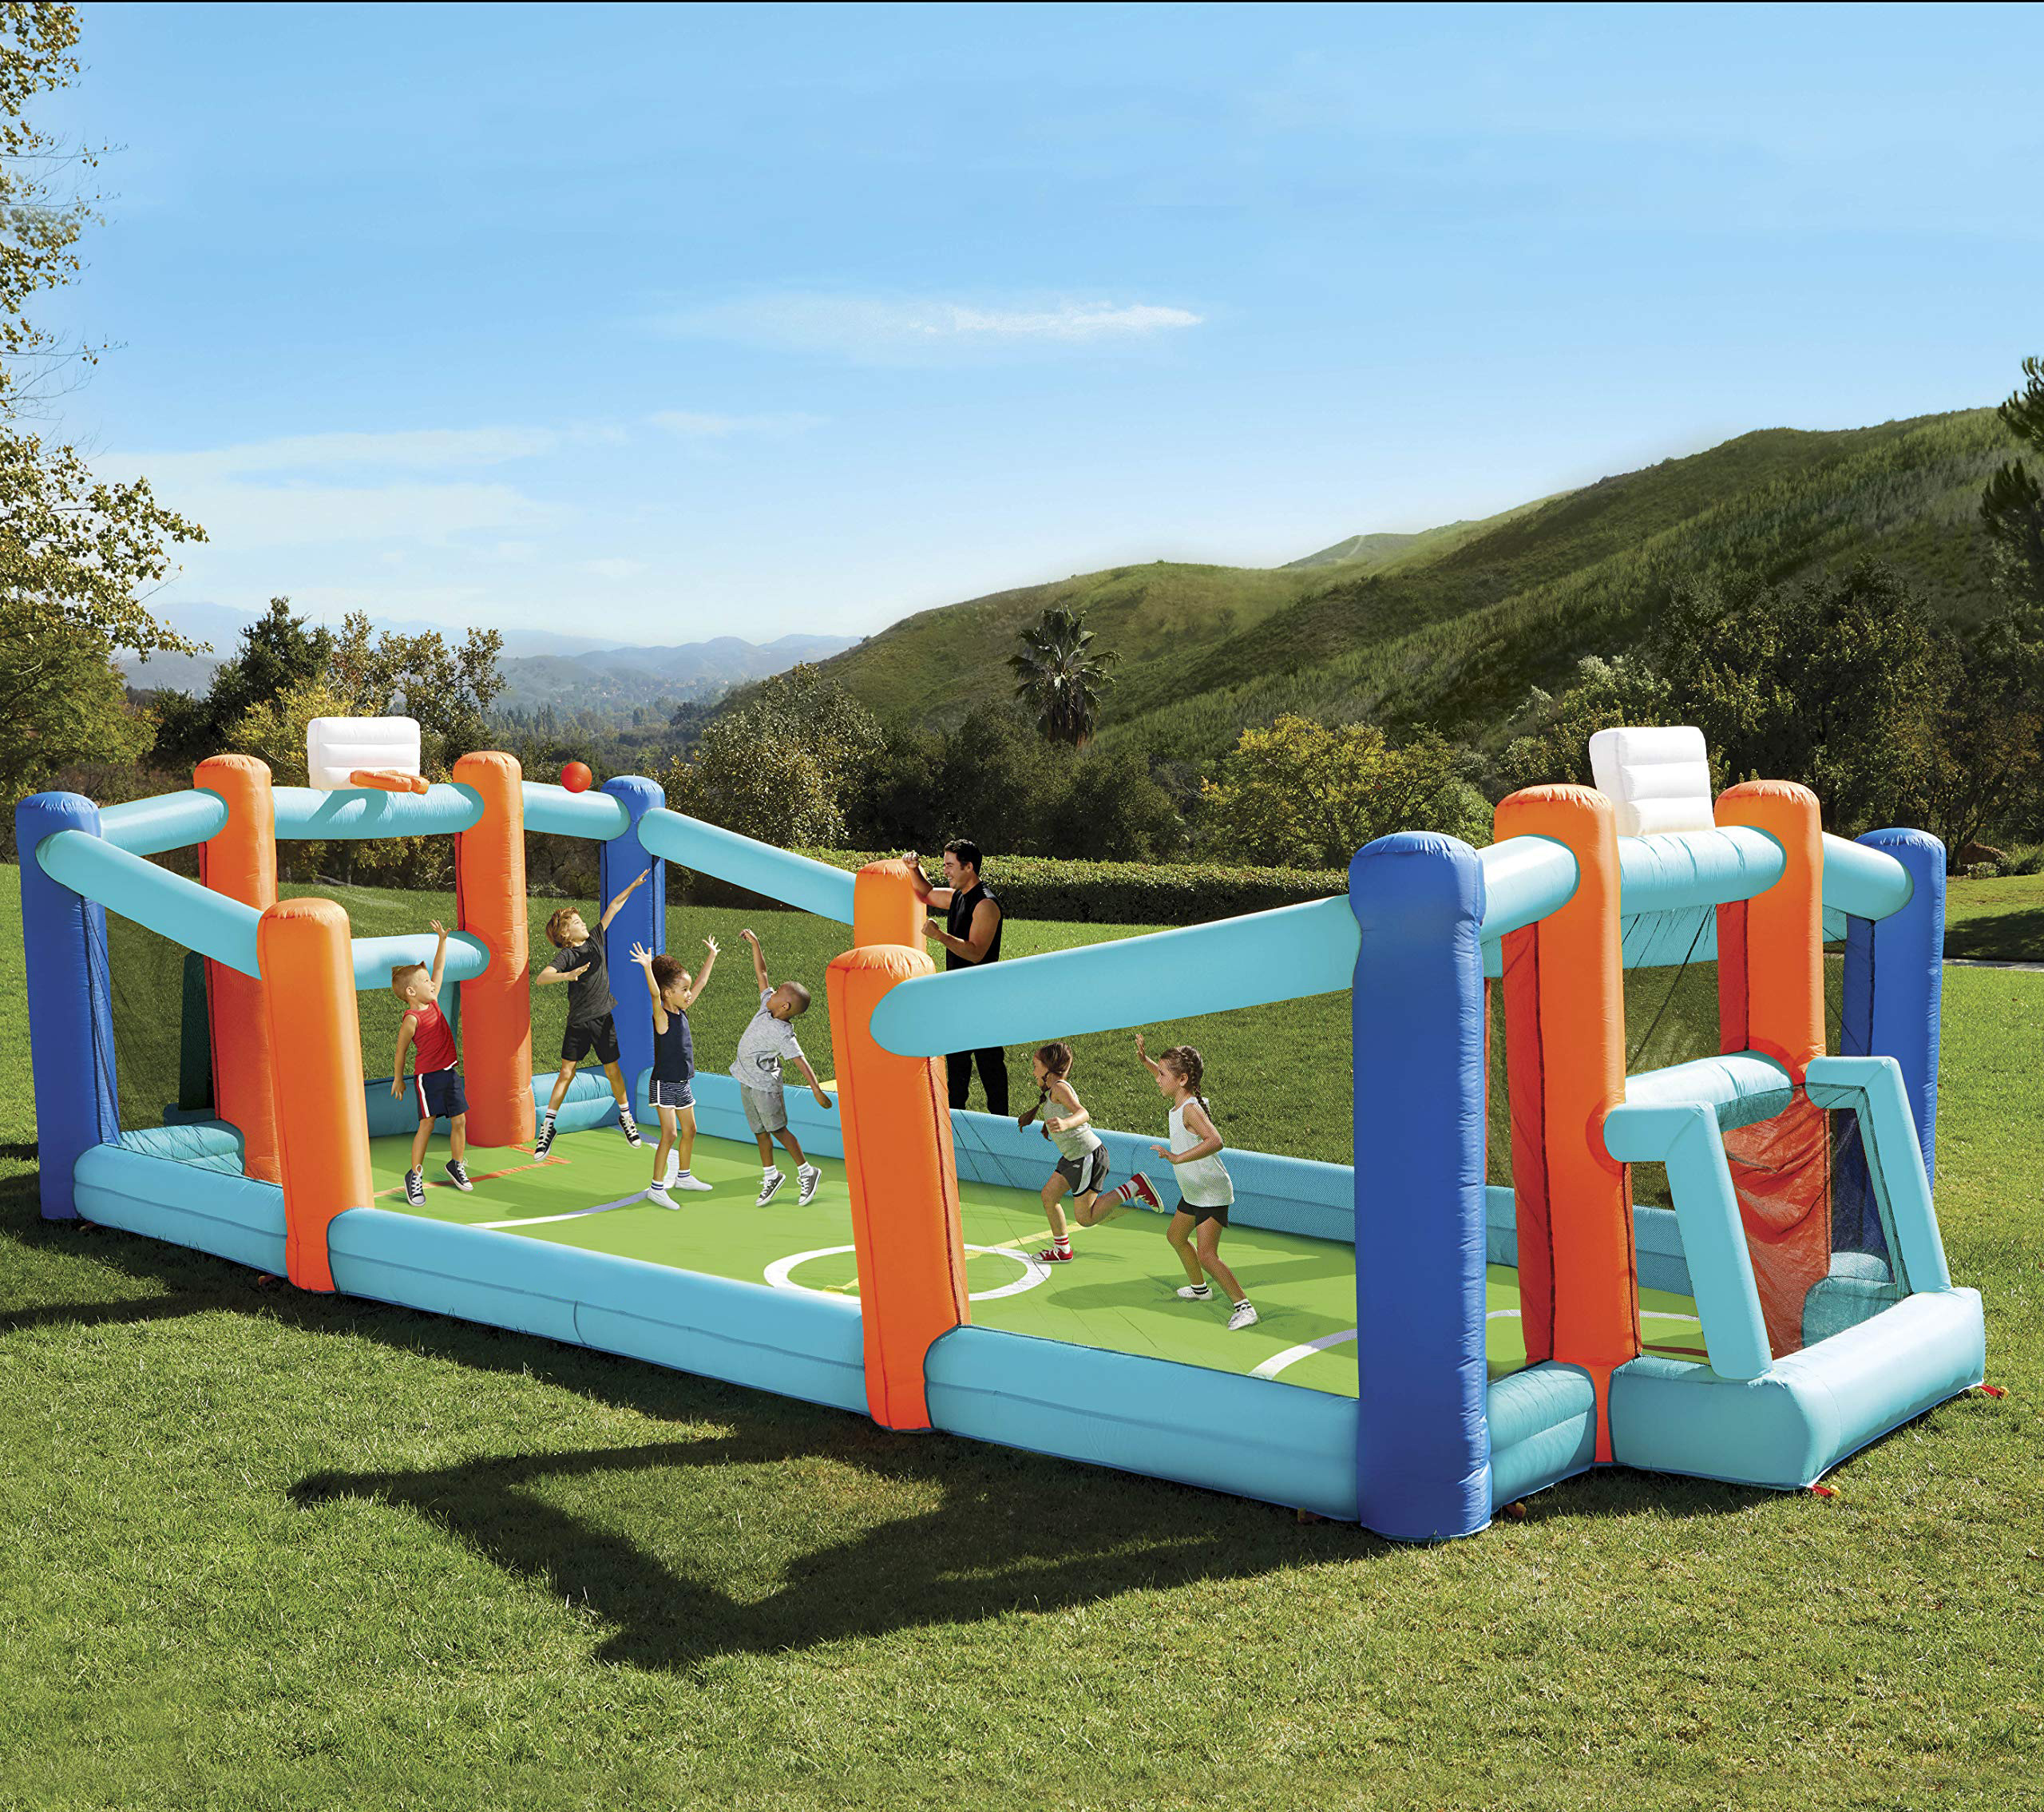 Huge Inflatable Backyard Soccer & Basketball Court for Multiple Kids